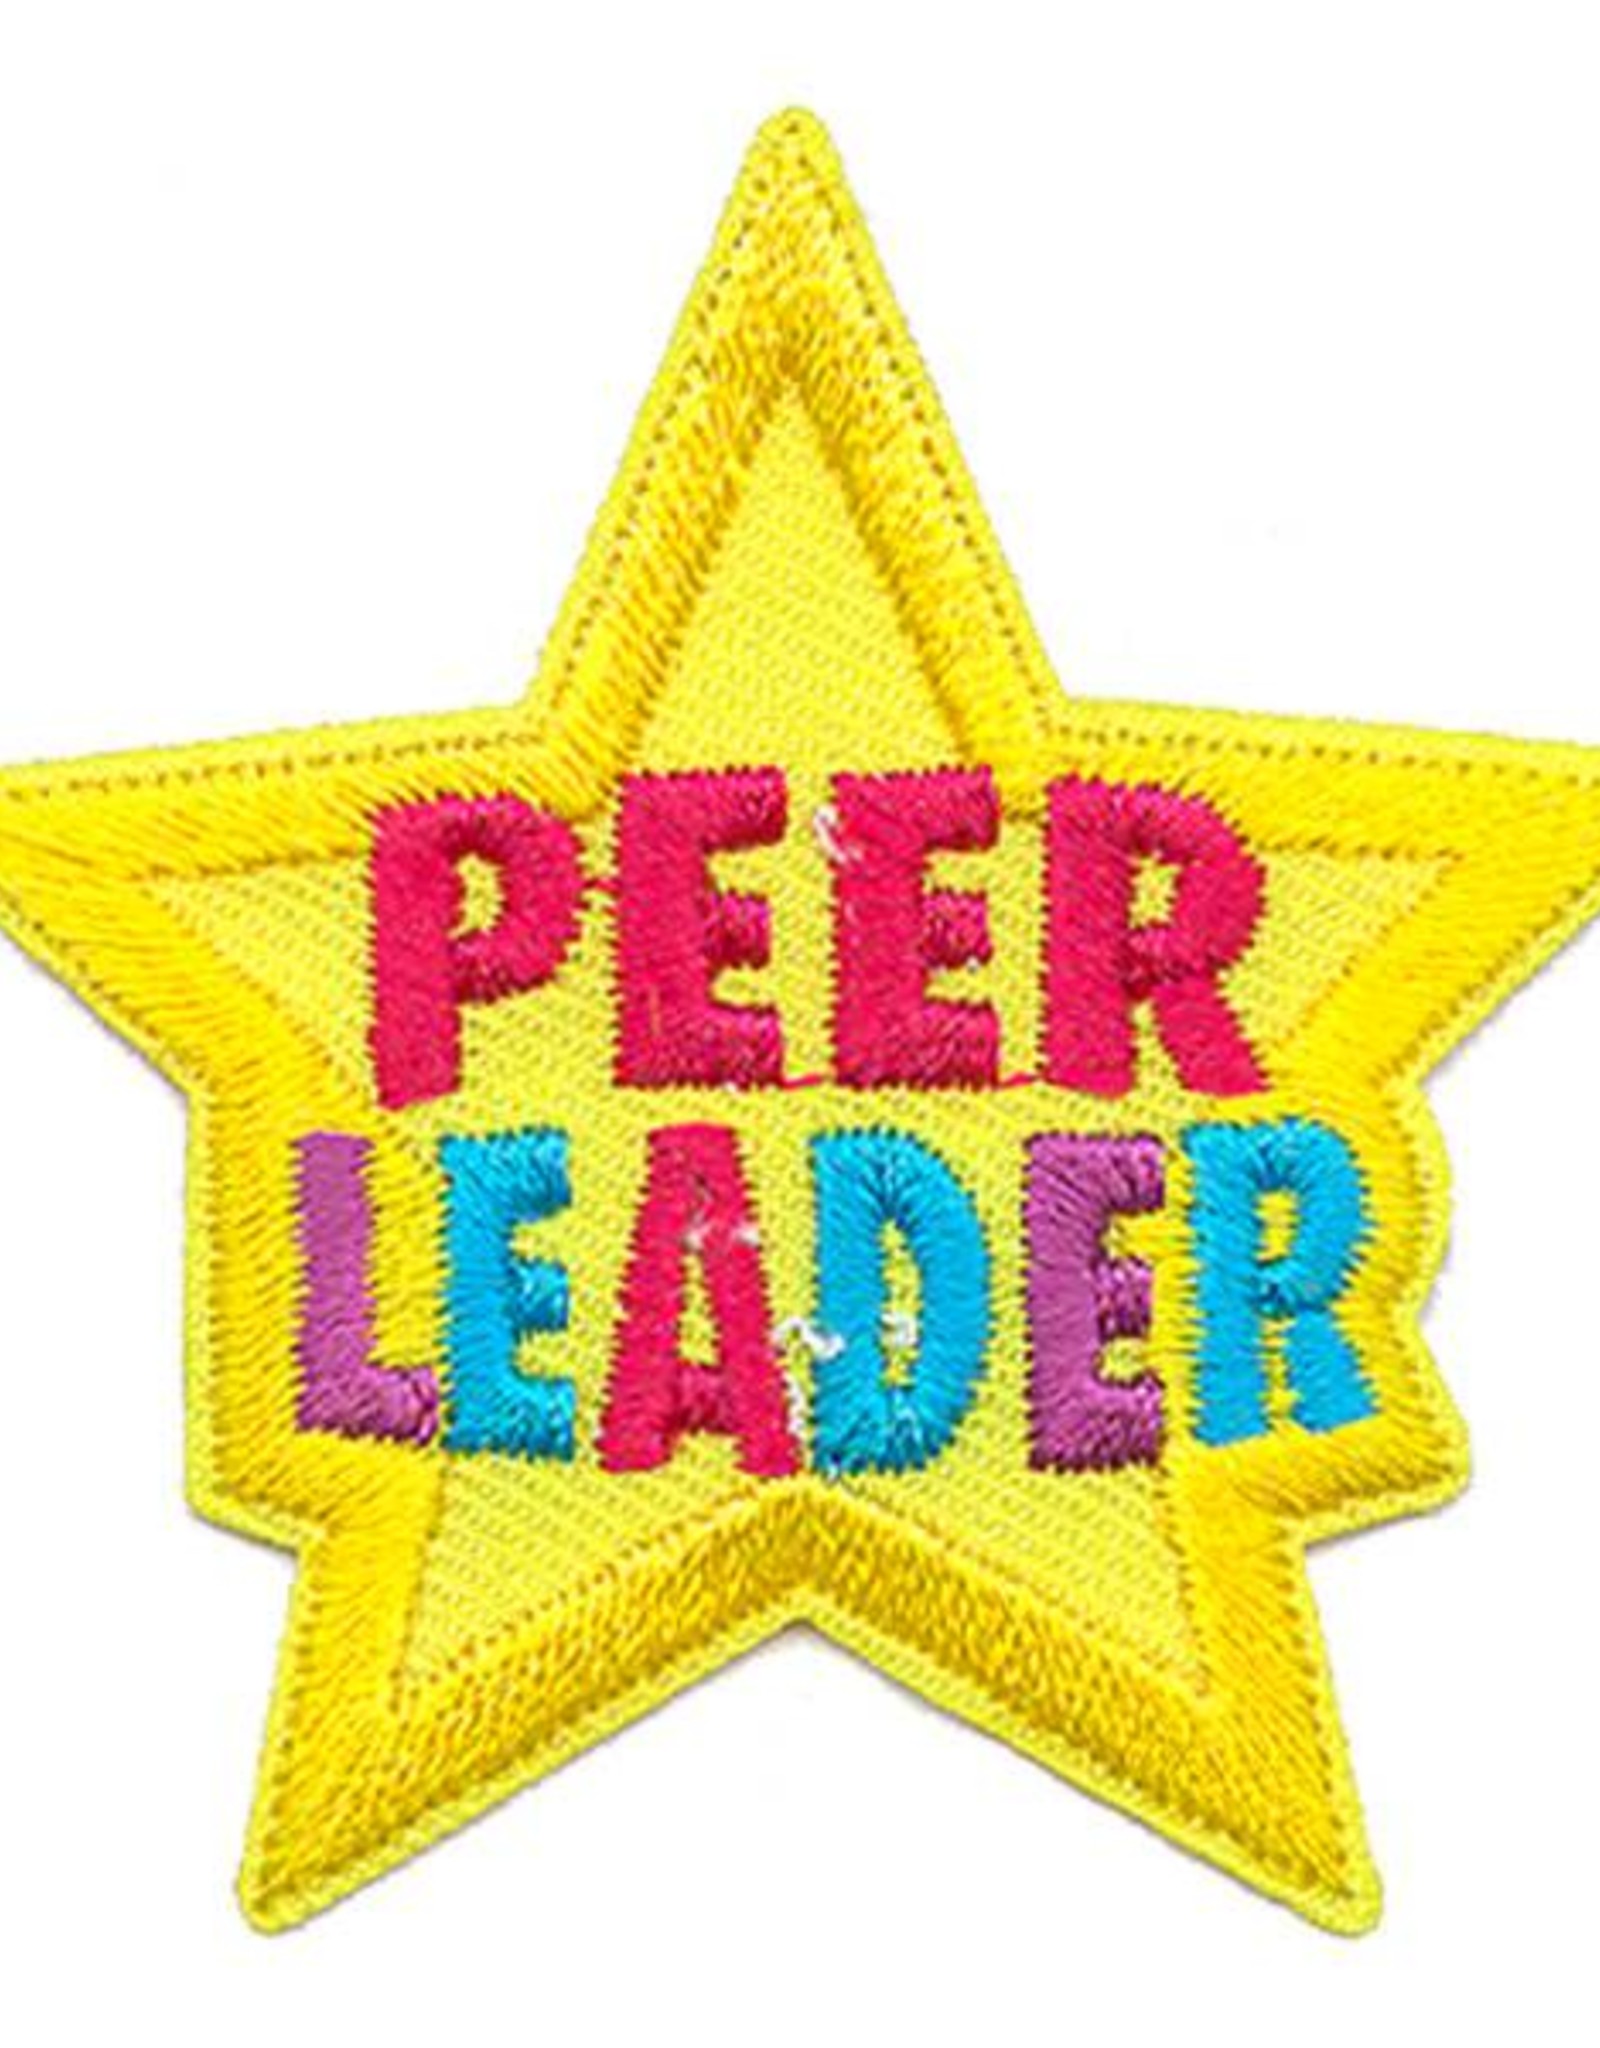 Advantage Emblem & Screen Prnt *Peer Leader Star Fun Patch